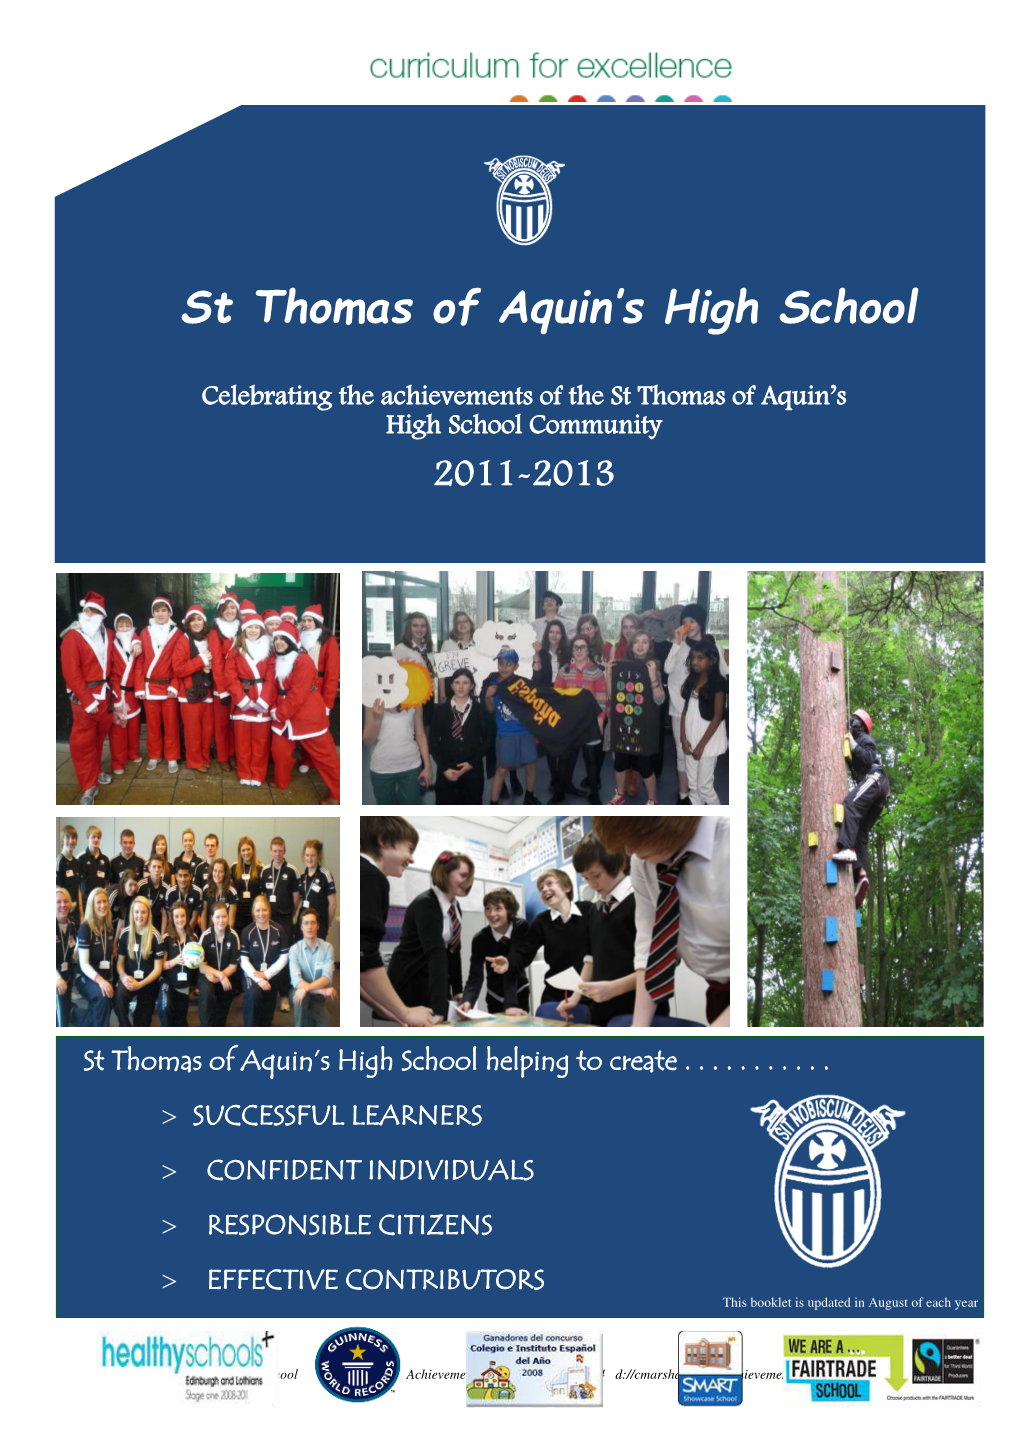 St Thomas of Aquin's High School